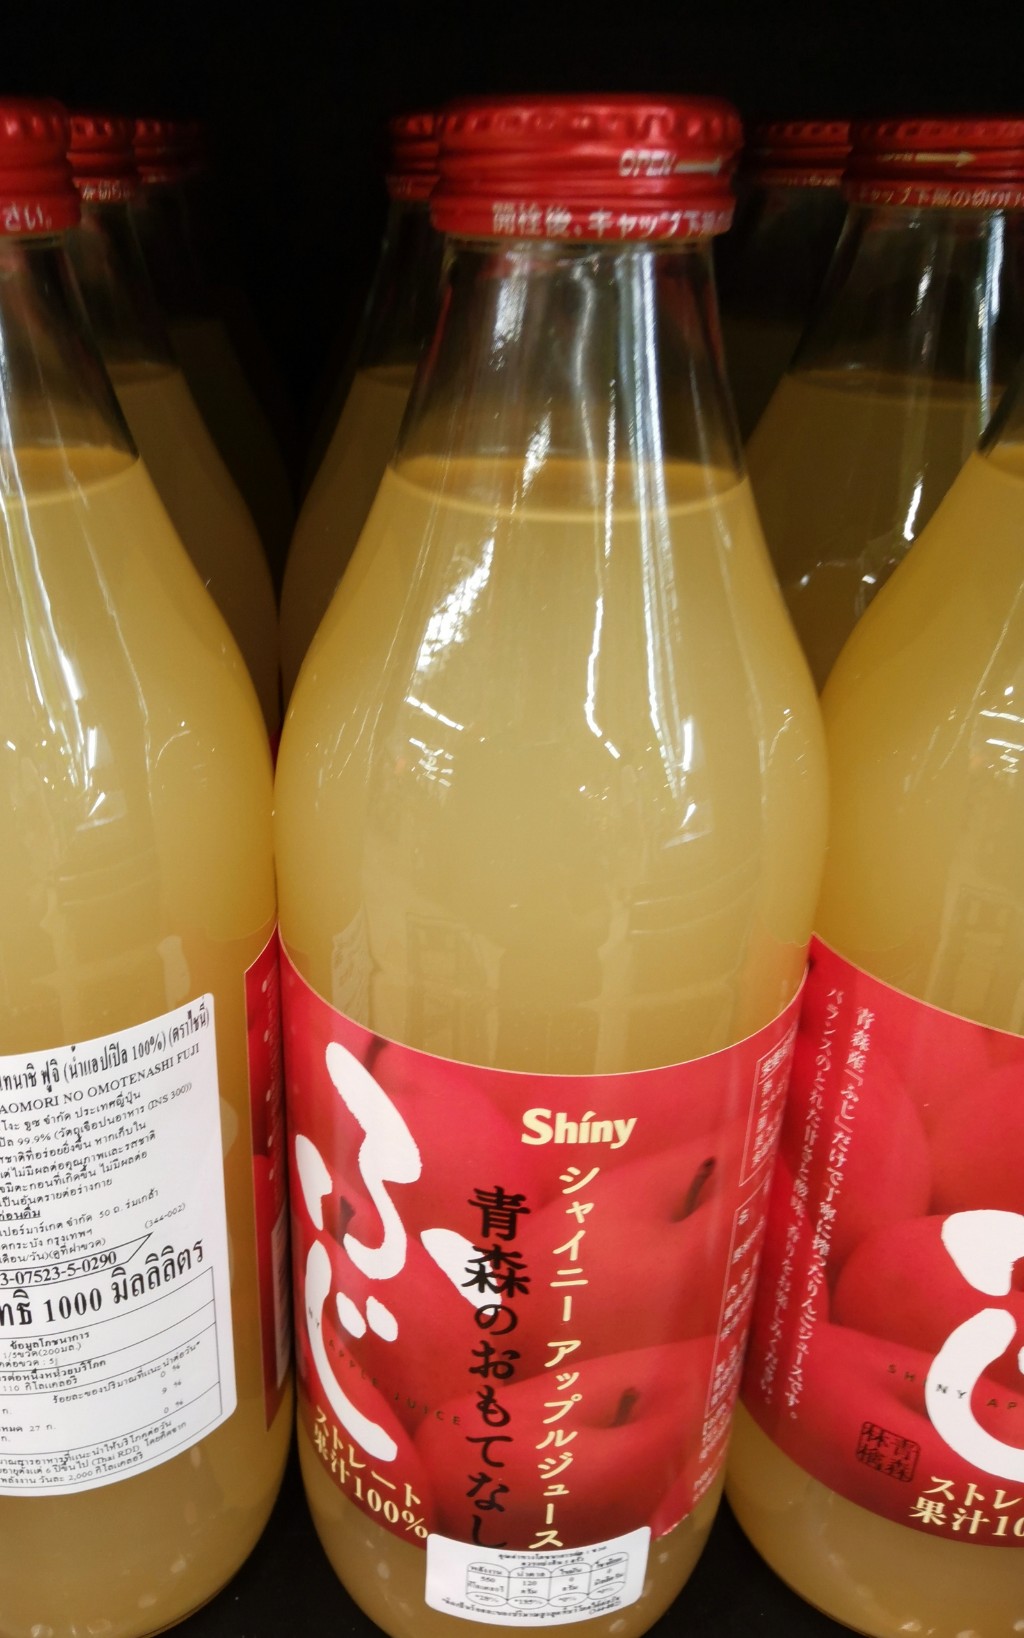 ecook ญี่ปุ่น เครื่องดื่ม น้ำแอปเปิ้ล อาโอโมริ โนะ โอโมเทนาชิ ฟูจิ hisupa dk shiny apple juice aomori no omotenashi fuji 1L